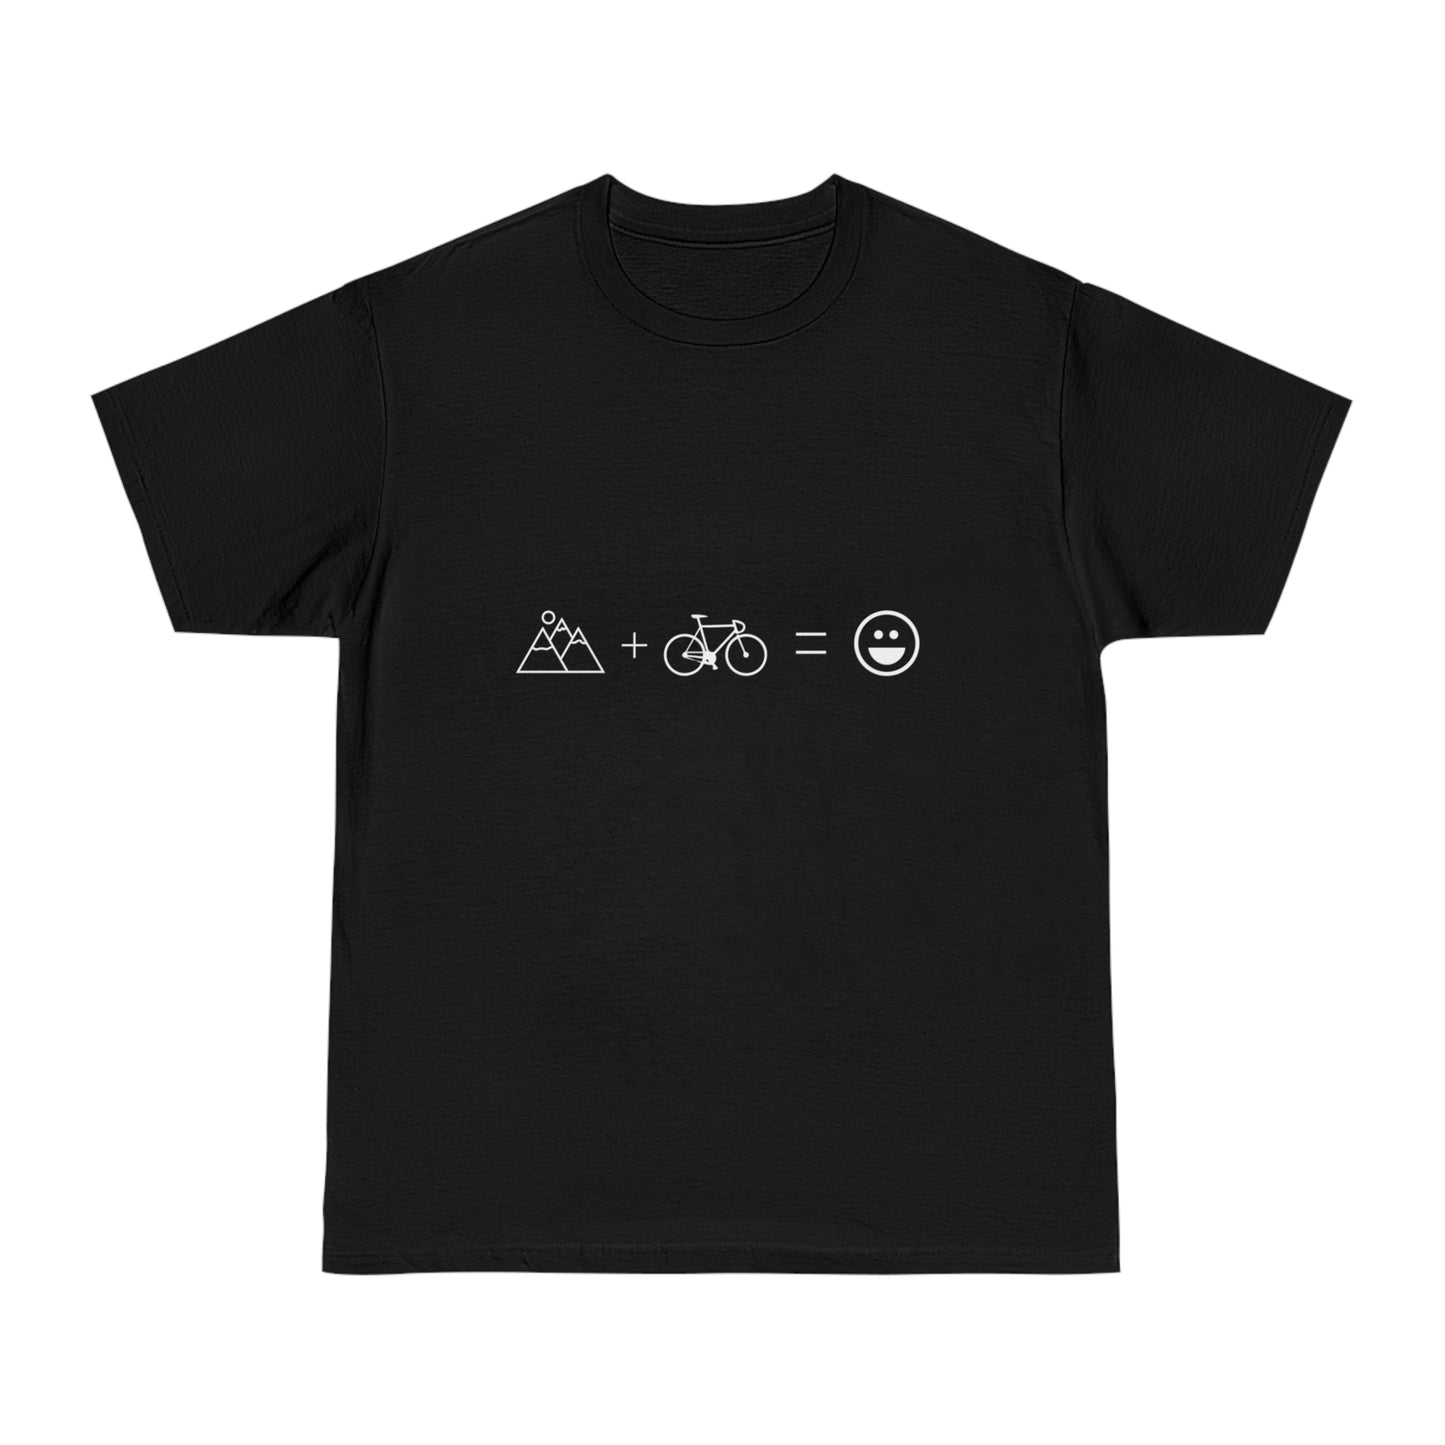 Mountain Biking Hammer™ T-shirt Pre-Shrunk Cotton